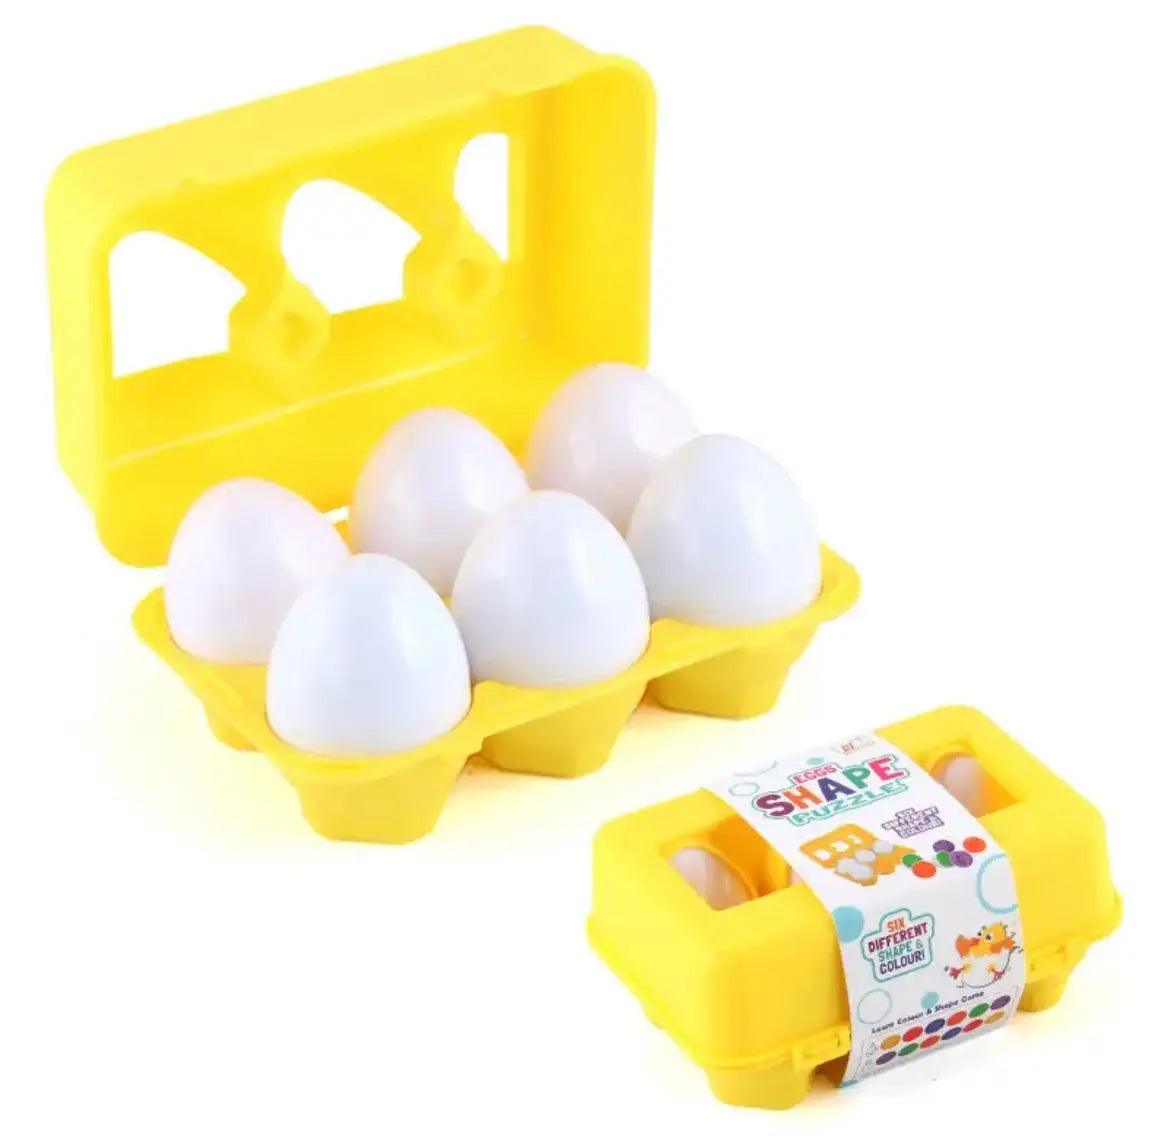 3D Egg Puzzles - ACO Marketplace